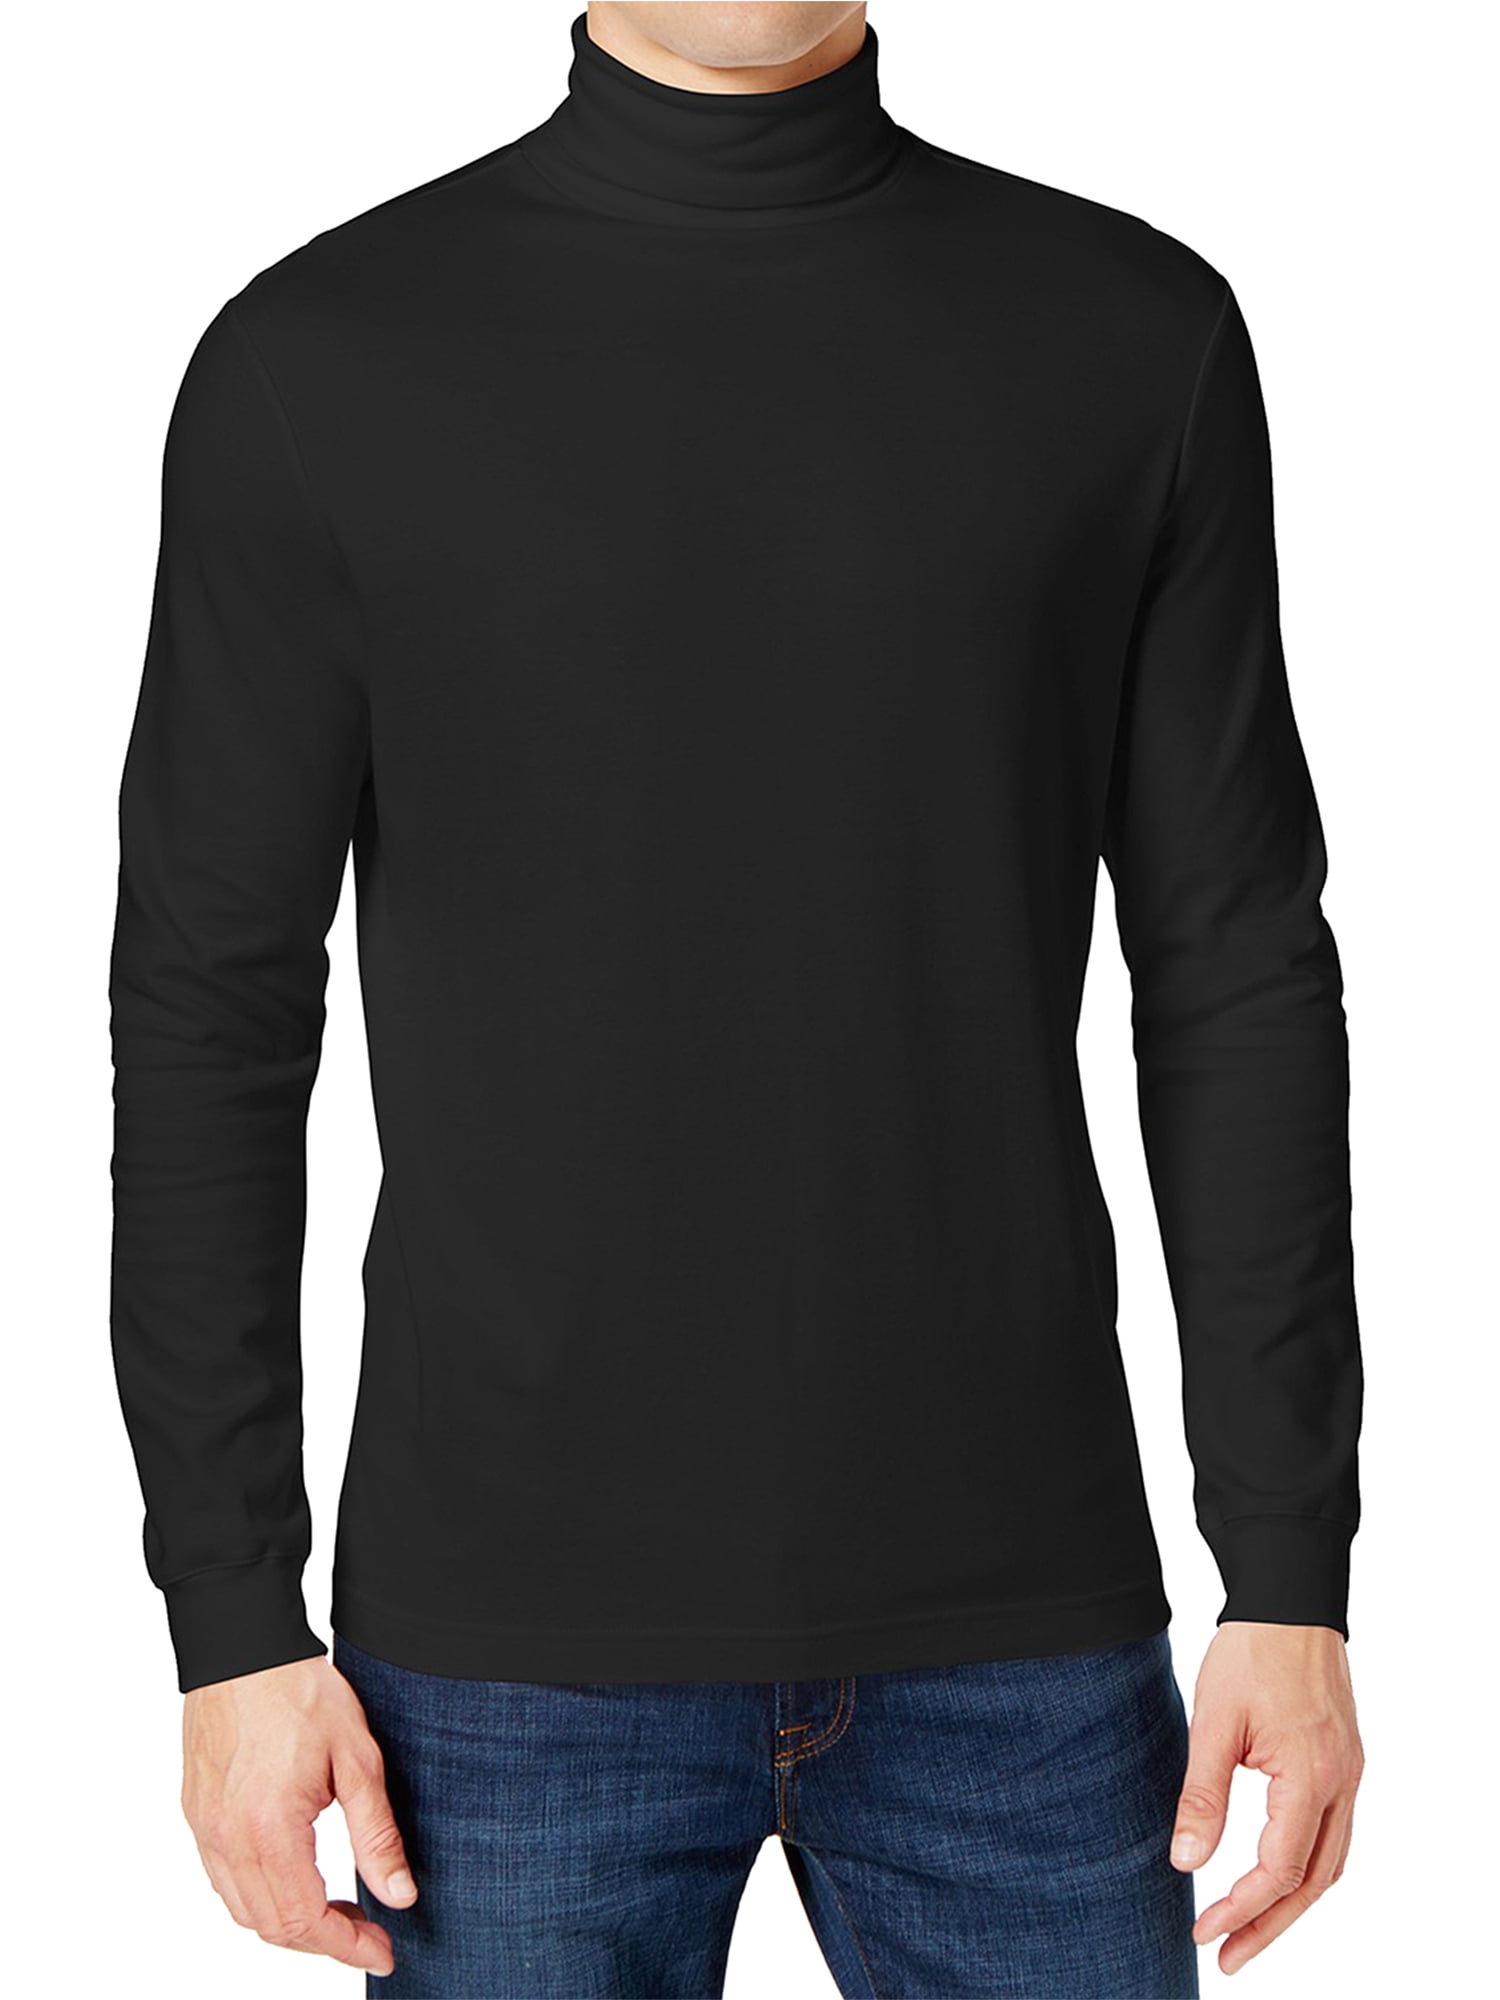 Men's Long Sleeve Turtle Neck T-Shirt (Sizes, S to 2XL) - Walmart.com